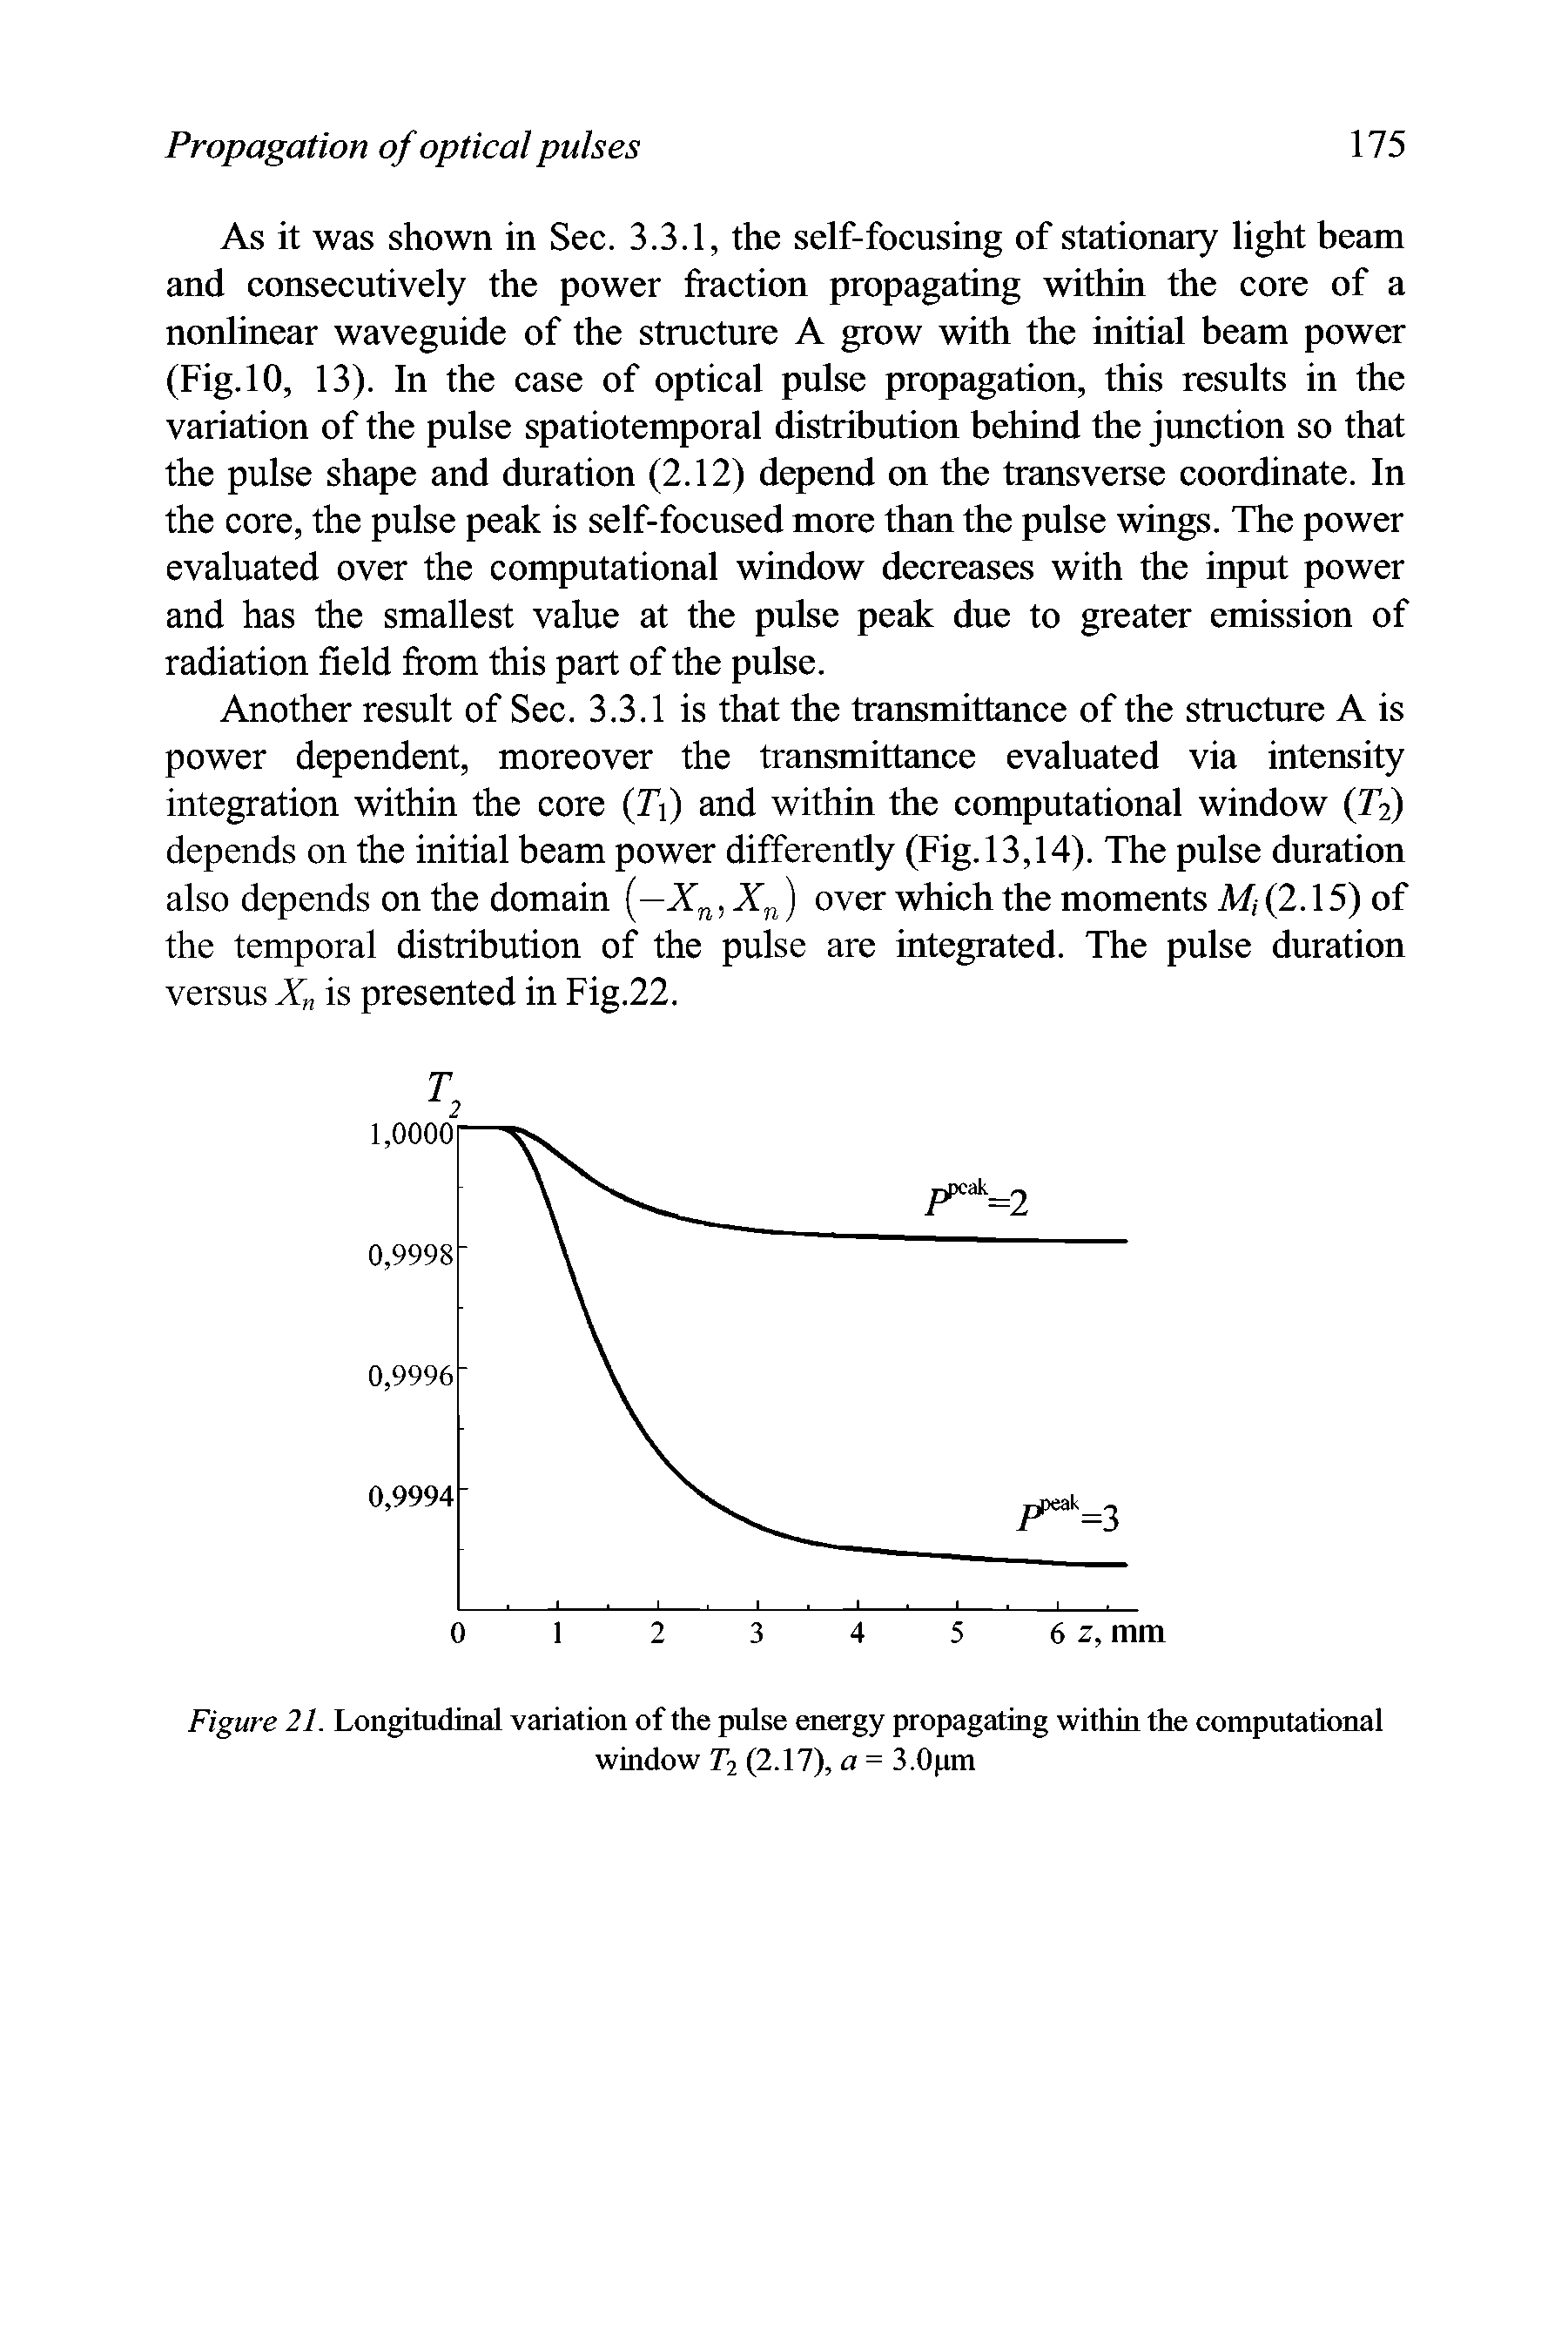 Figure 21. Longitudinal variation of the pulse energy propagating within the computational...